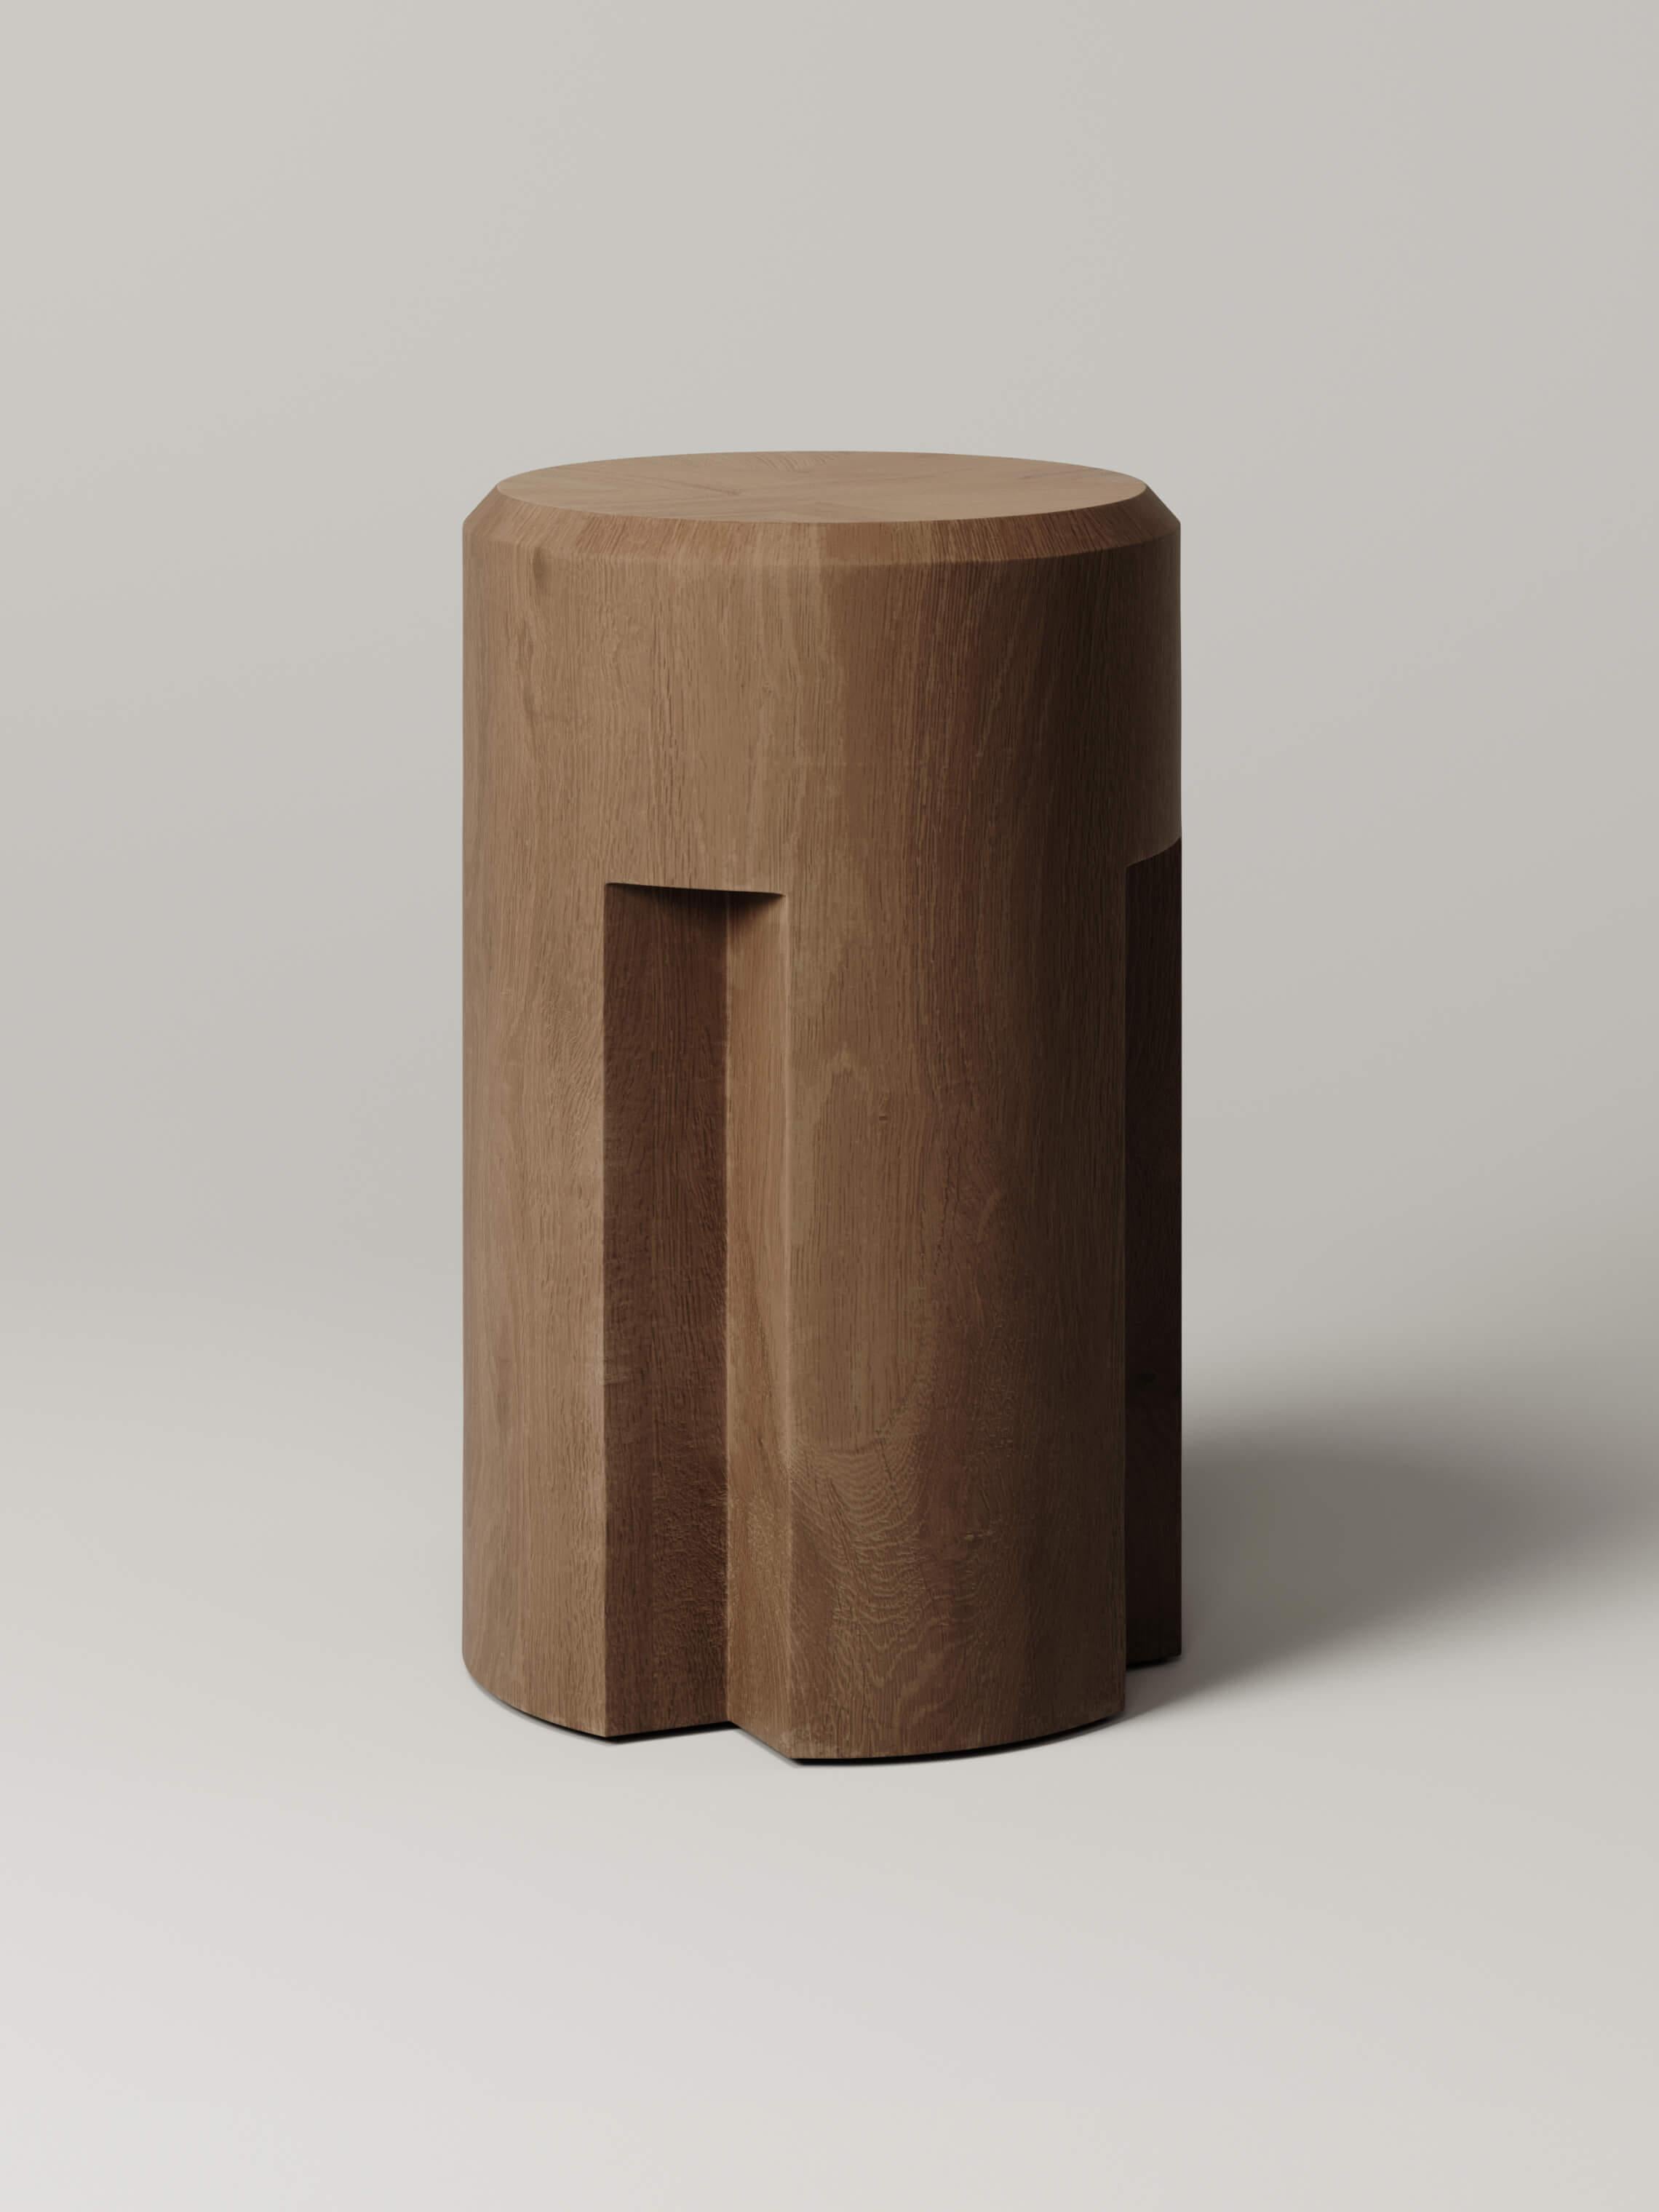 Contemporary M_003 Counter Stool designed by Studio Le Cann for Monolith Studio, Travertine For Sale